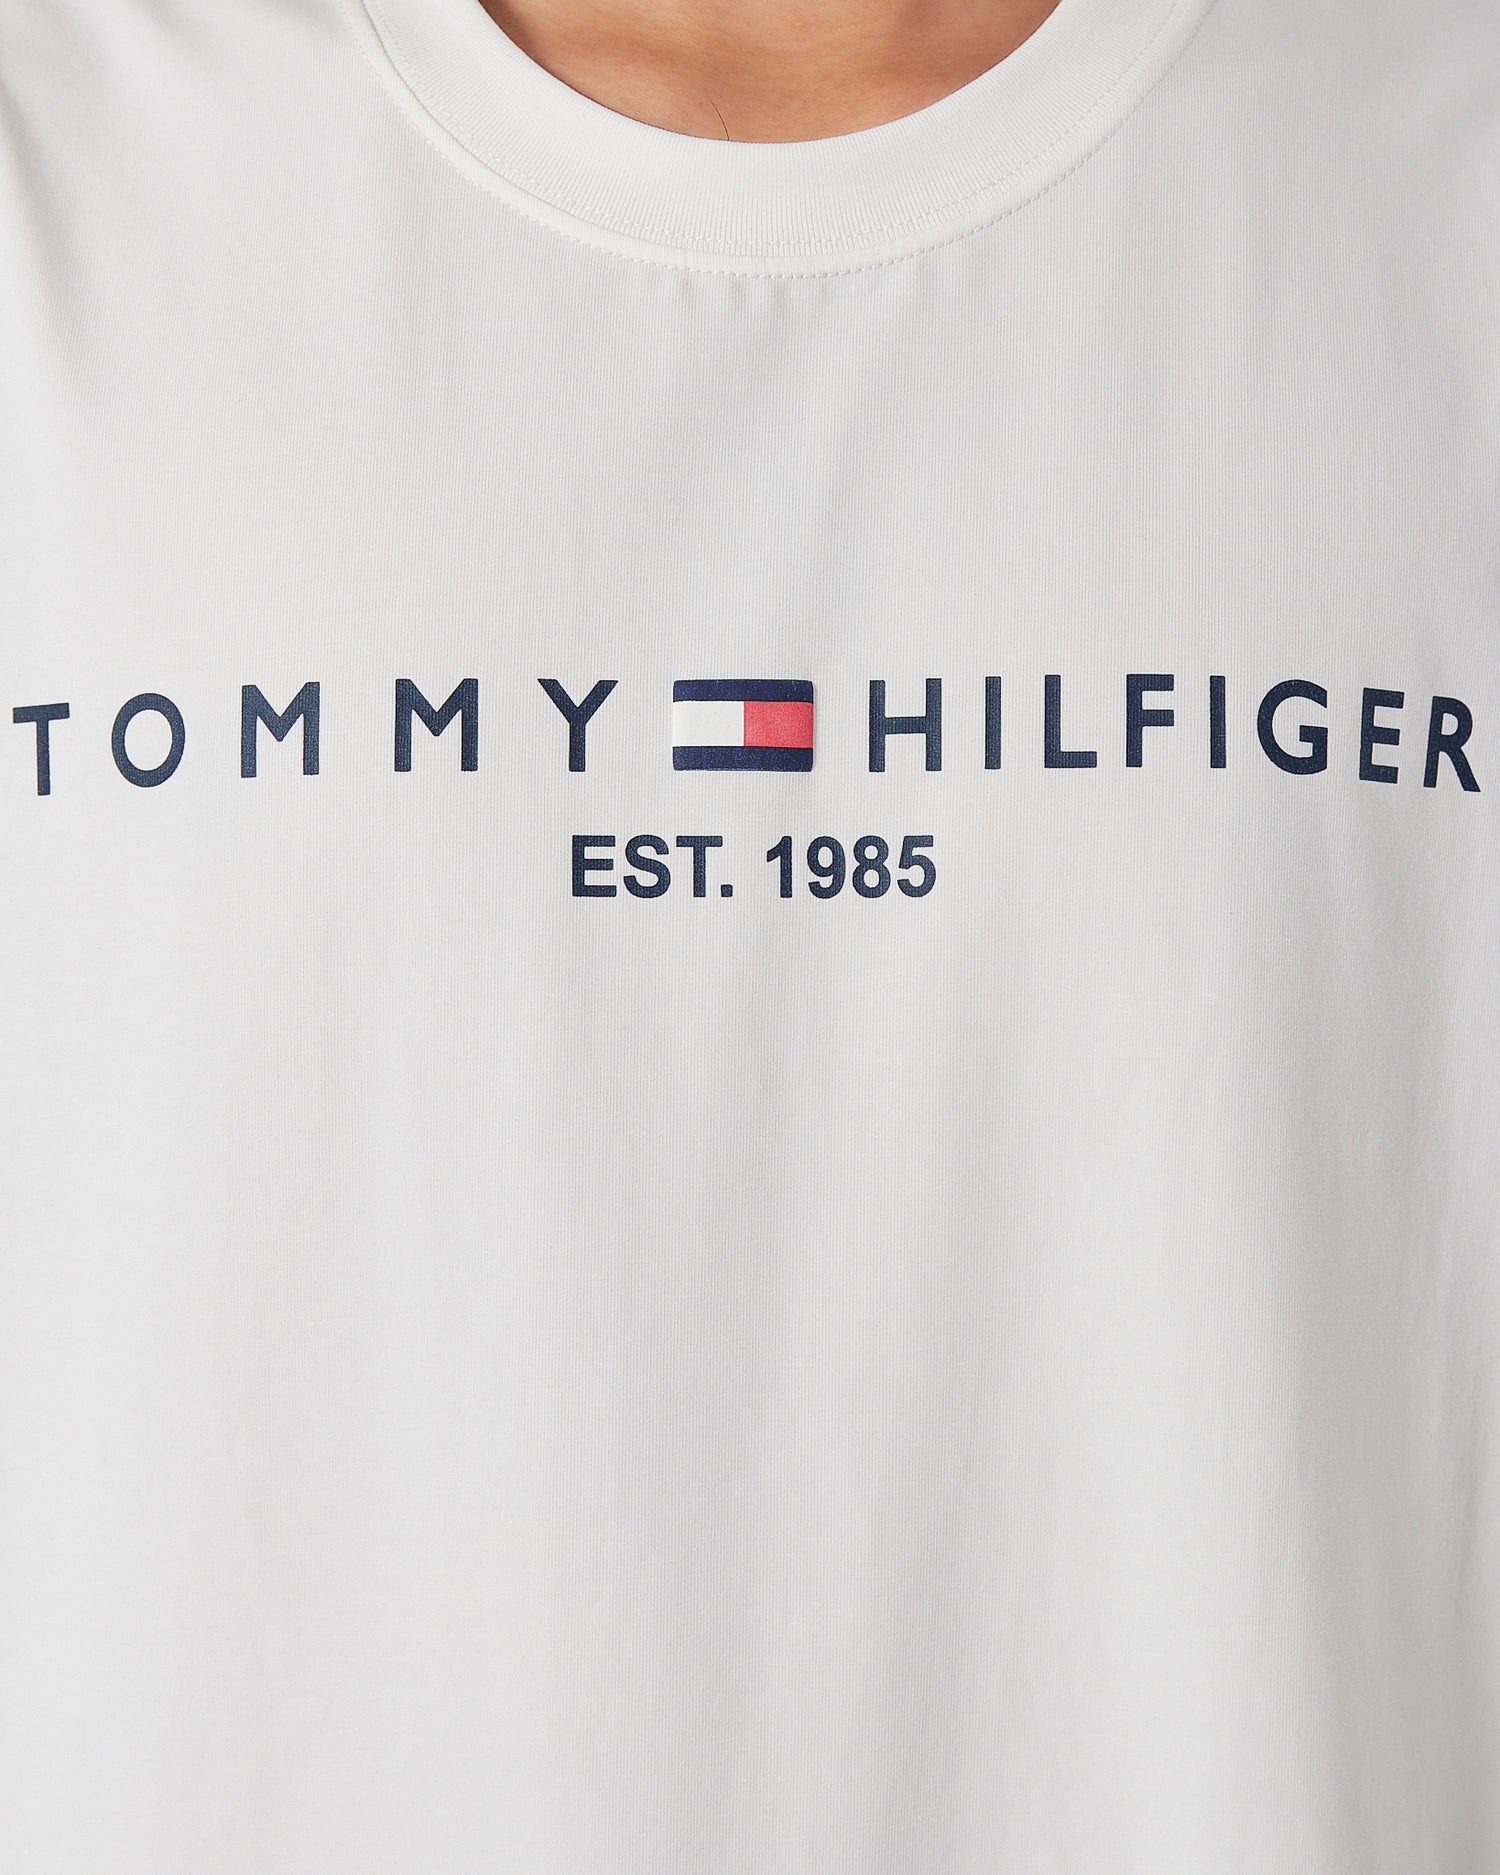 TH Logo Printed Men White T-Shirt 14.90